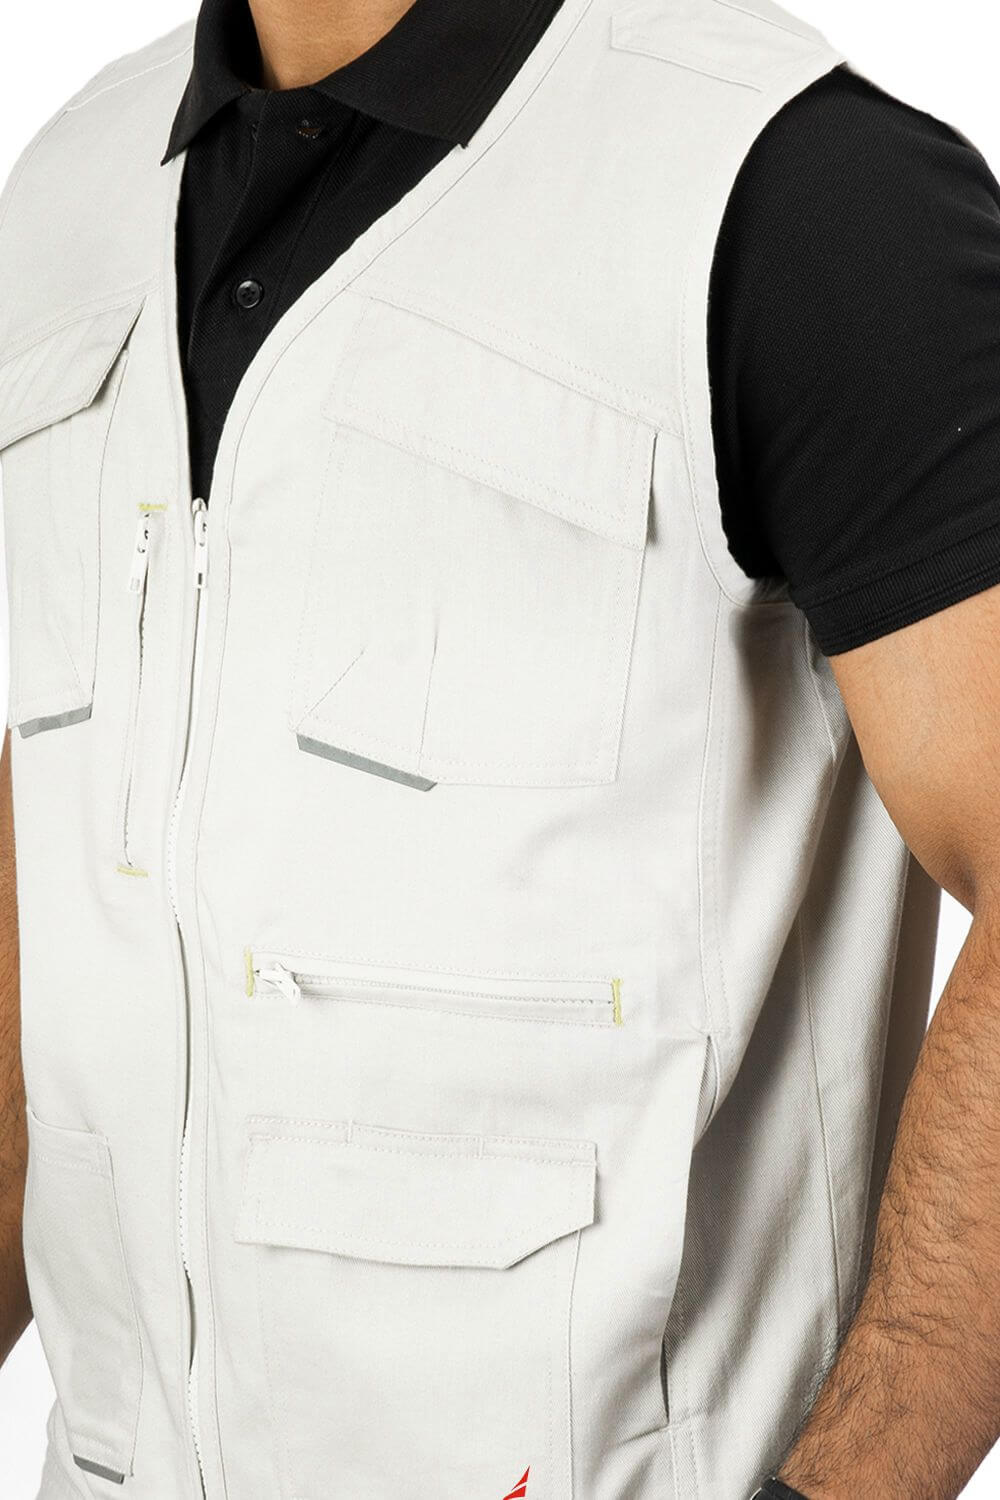 Stylised mid-torso bone pockets with concealed zips. An ergonomically designed multi-utility safari Beige vest.